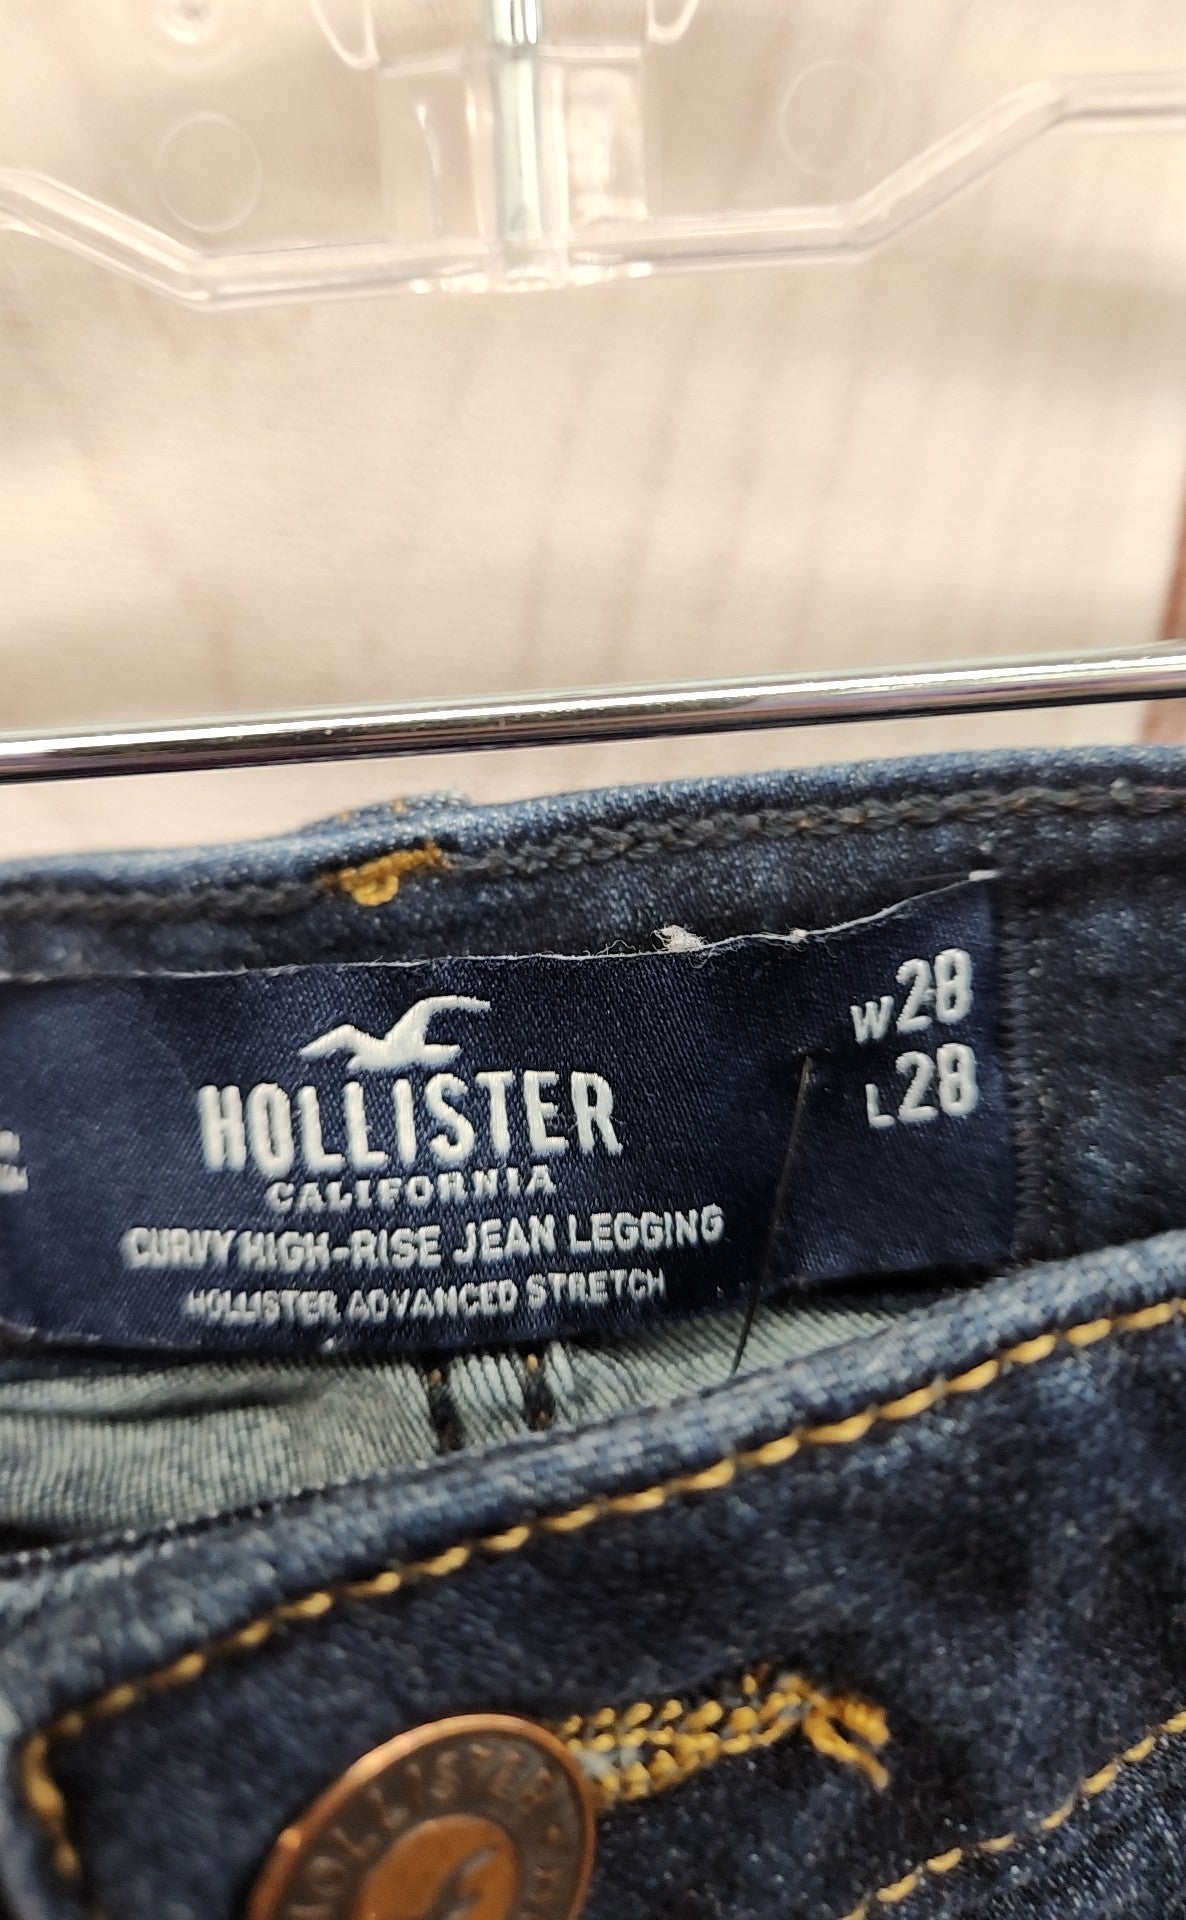 Hollister Women's Size 28 (5-6) Curvy High Rise Jean Legging Blue Jeans